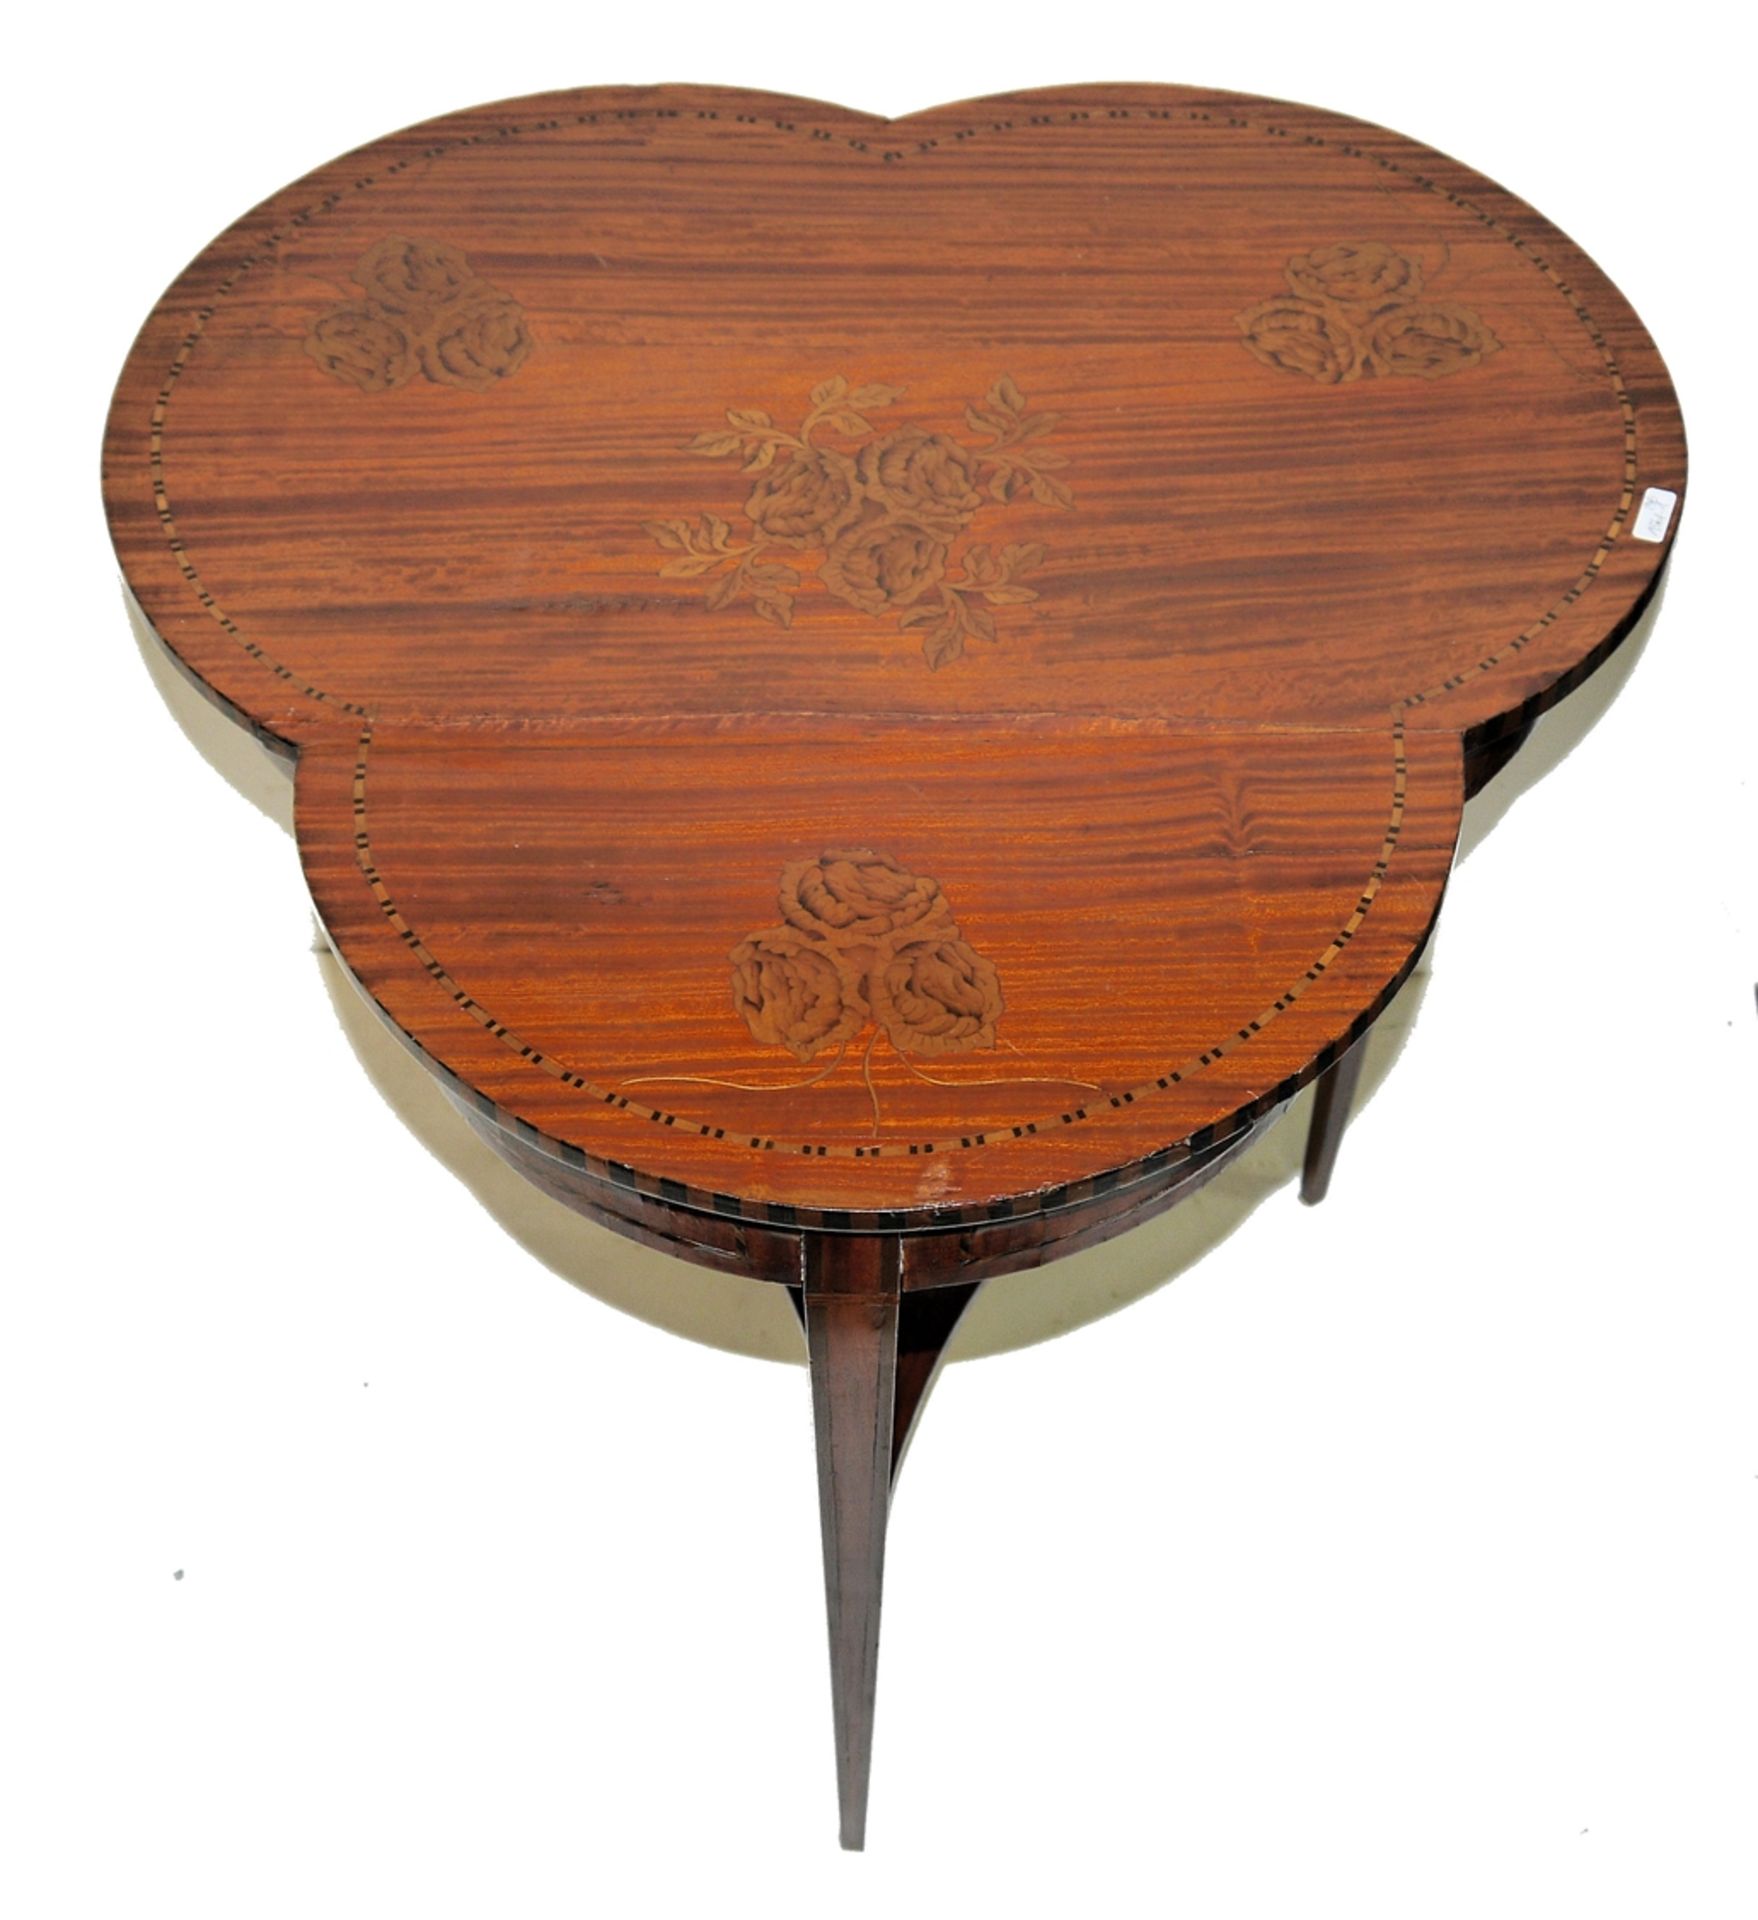 Elegant English tea table c. 1900 - Image 2 of 2